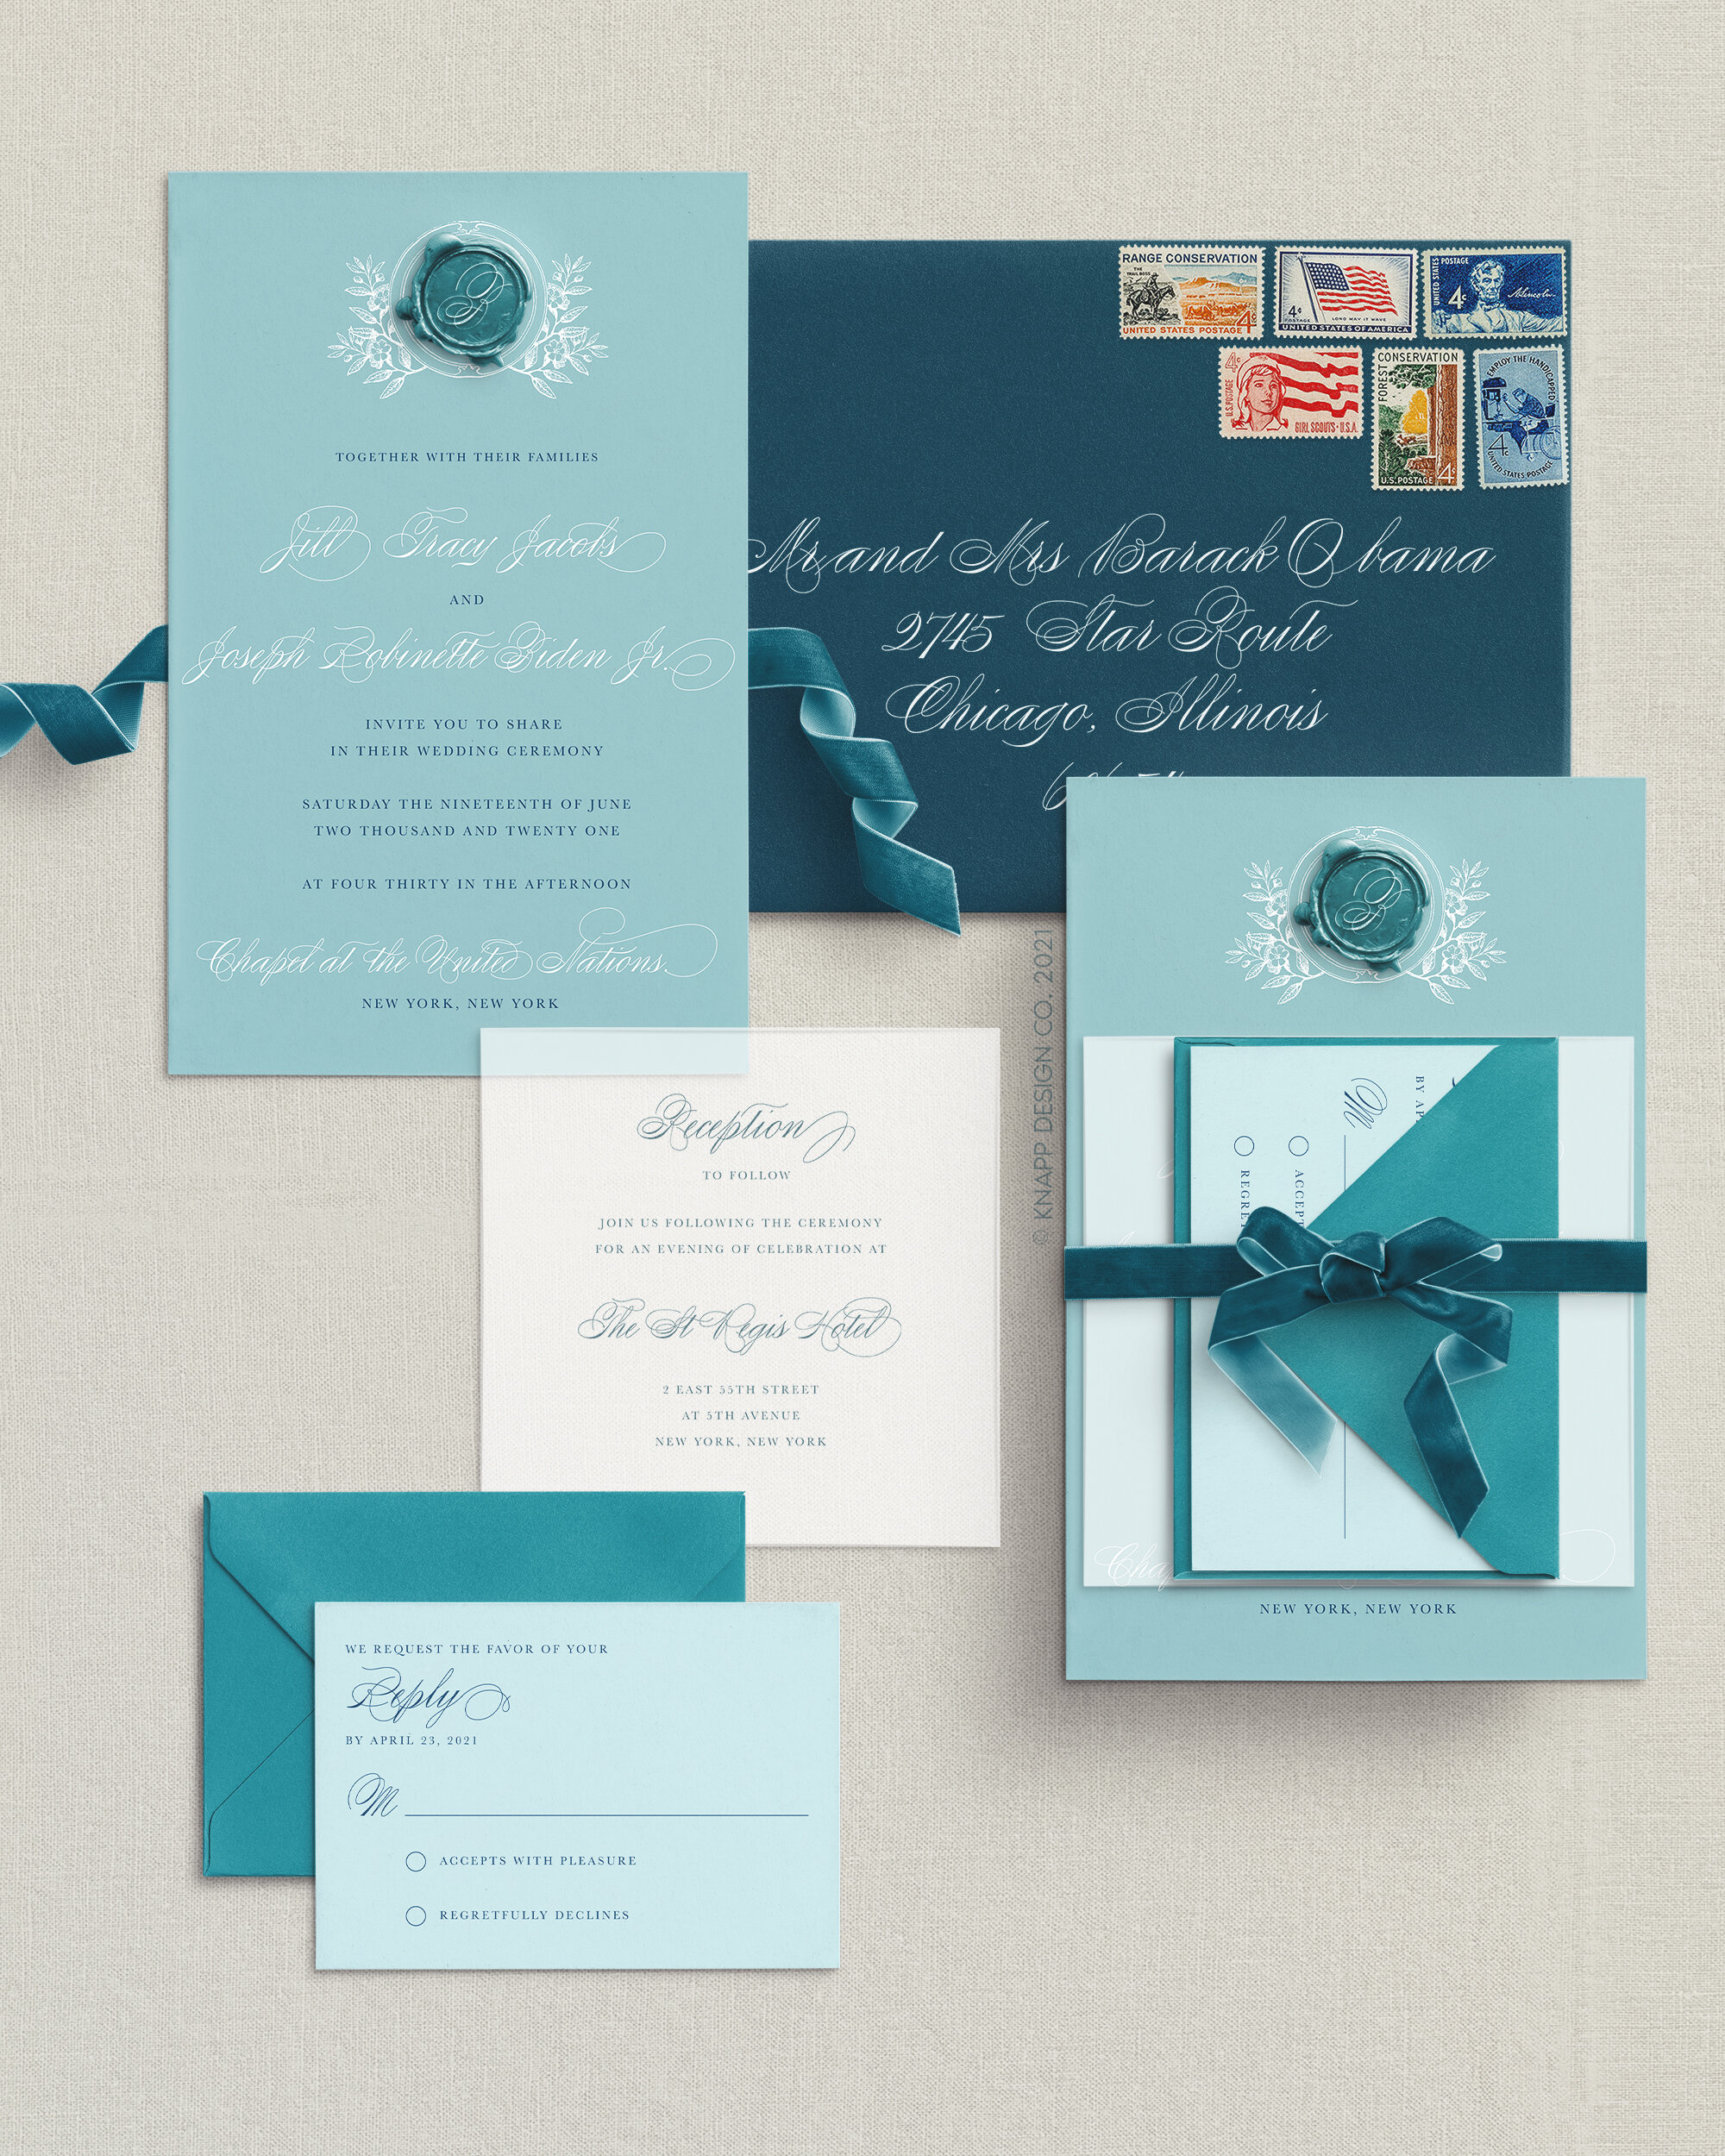 Teal Wedding invitation suite with velvet ribbon inspired by Jill Biden